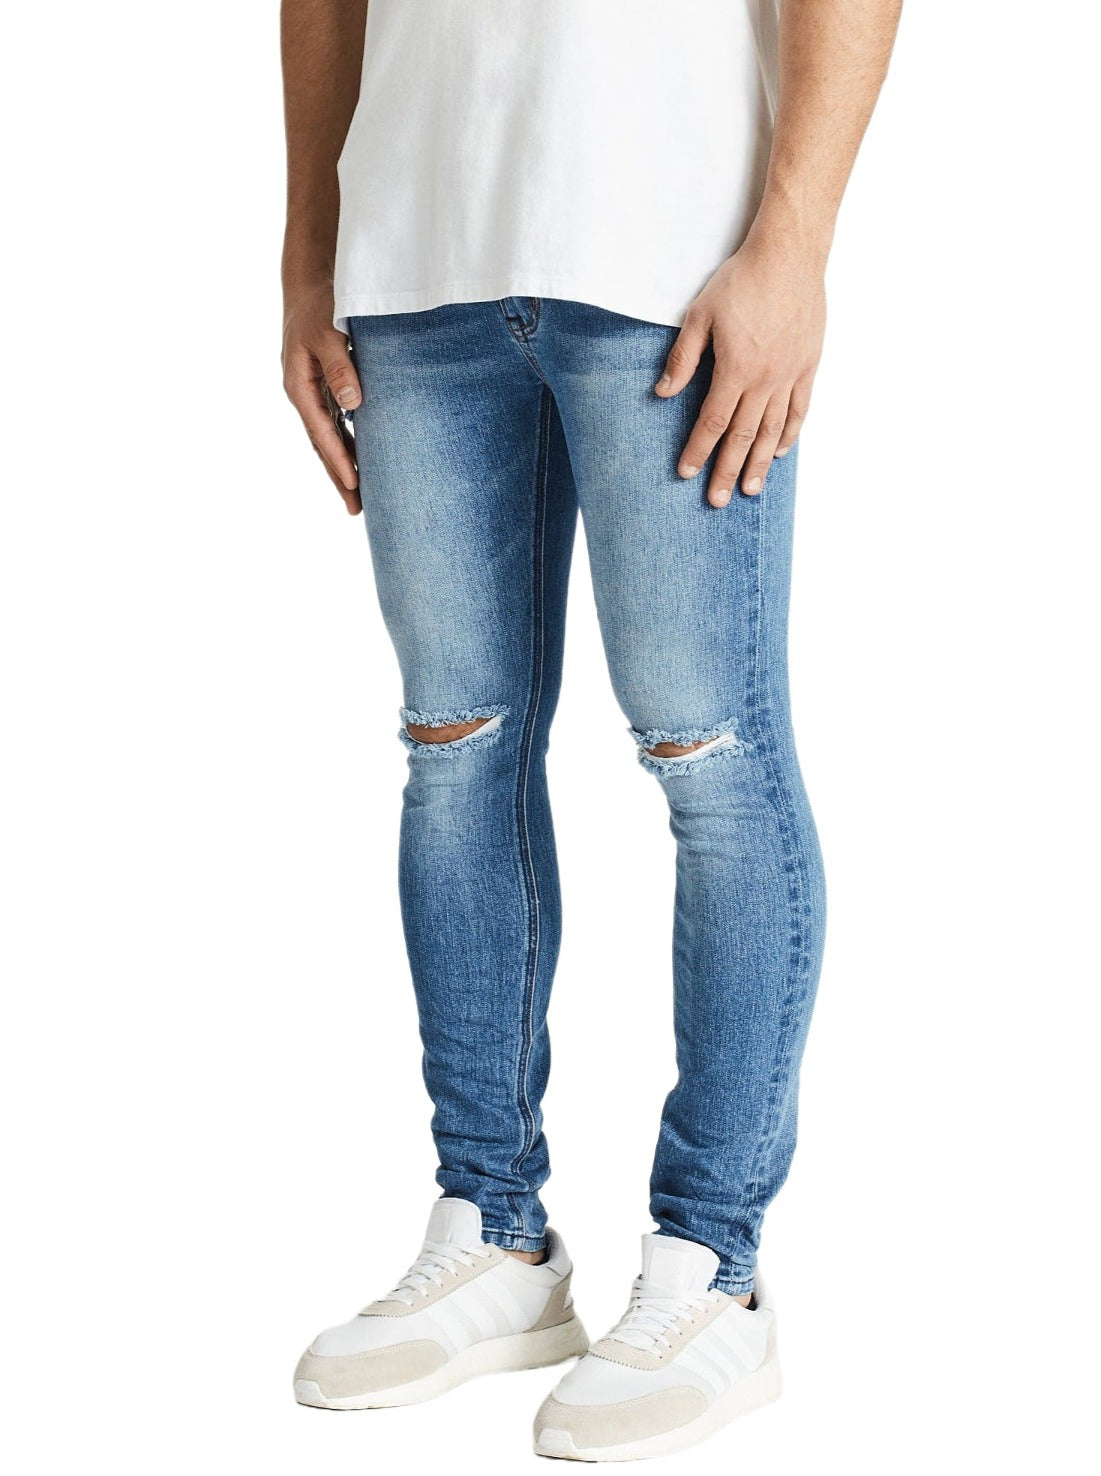 Nena And Pasadena - NXP Fit 88 Arizona Jean Blue – Super Tyler - Skinny Jeans